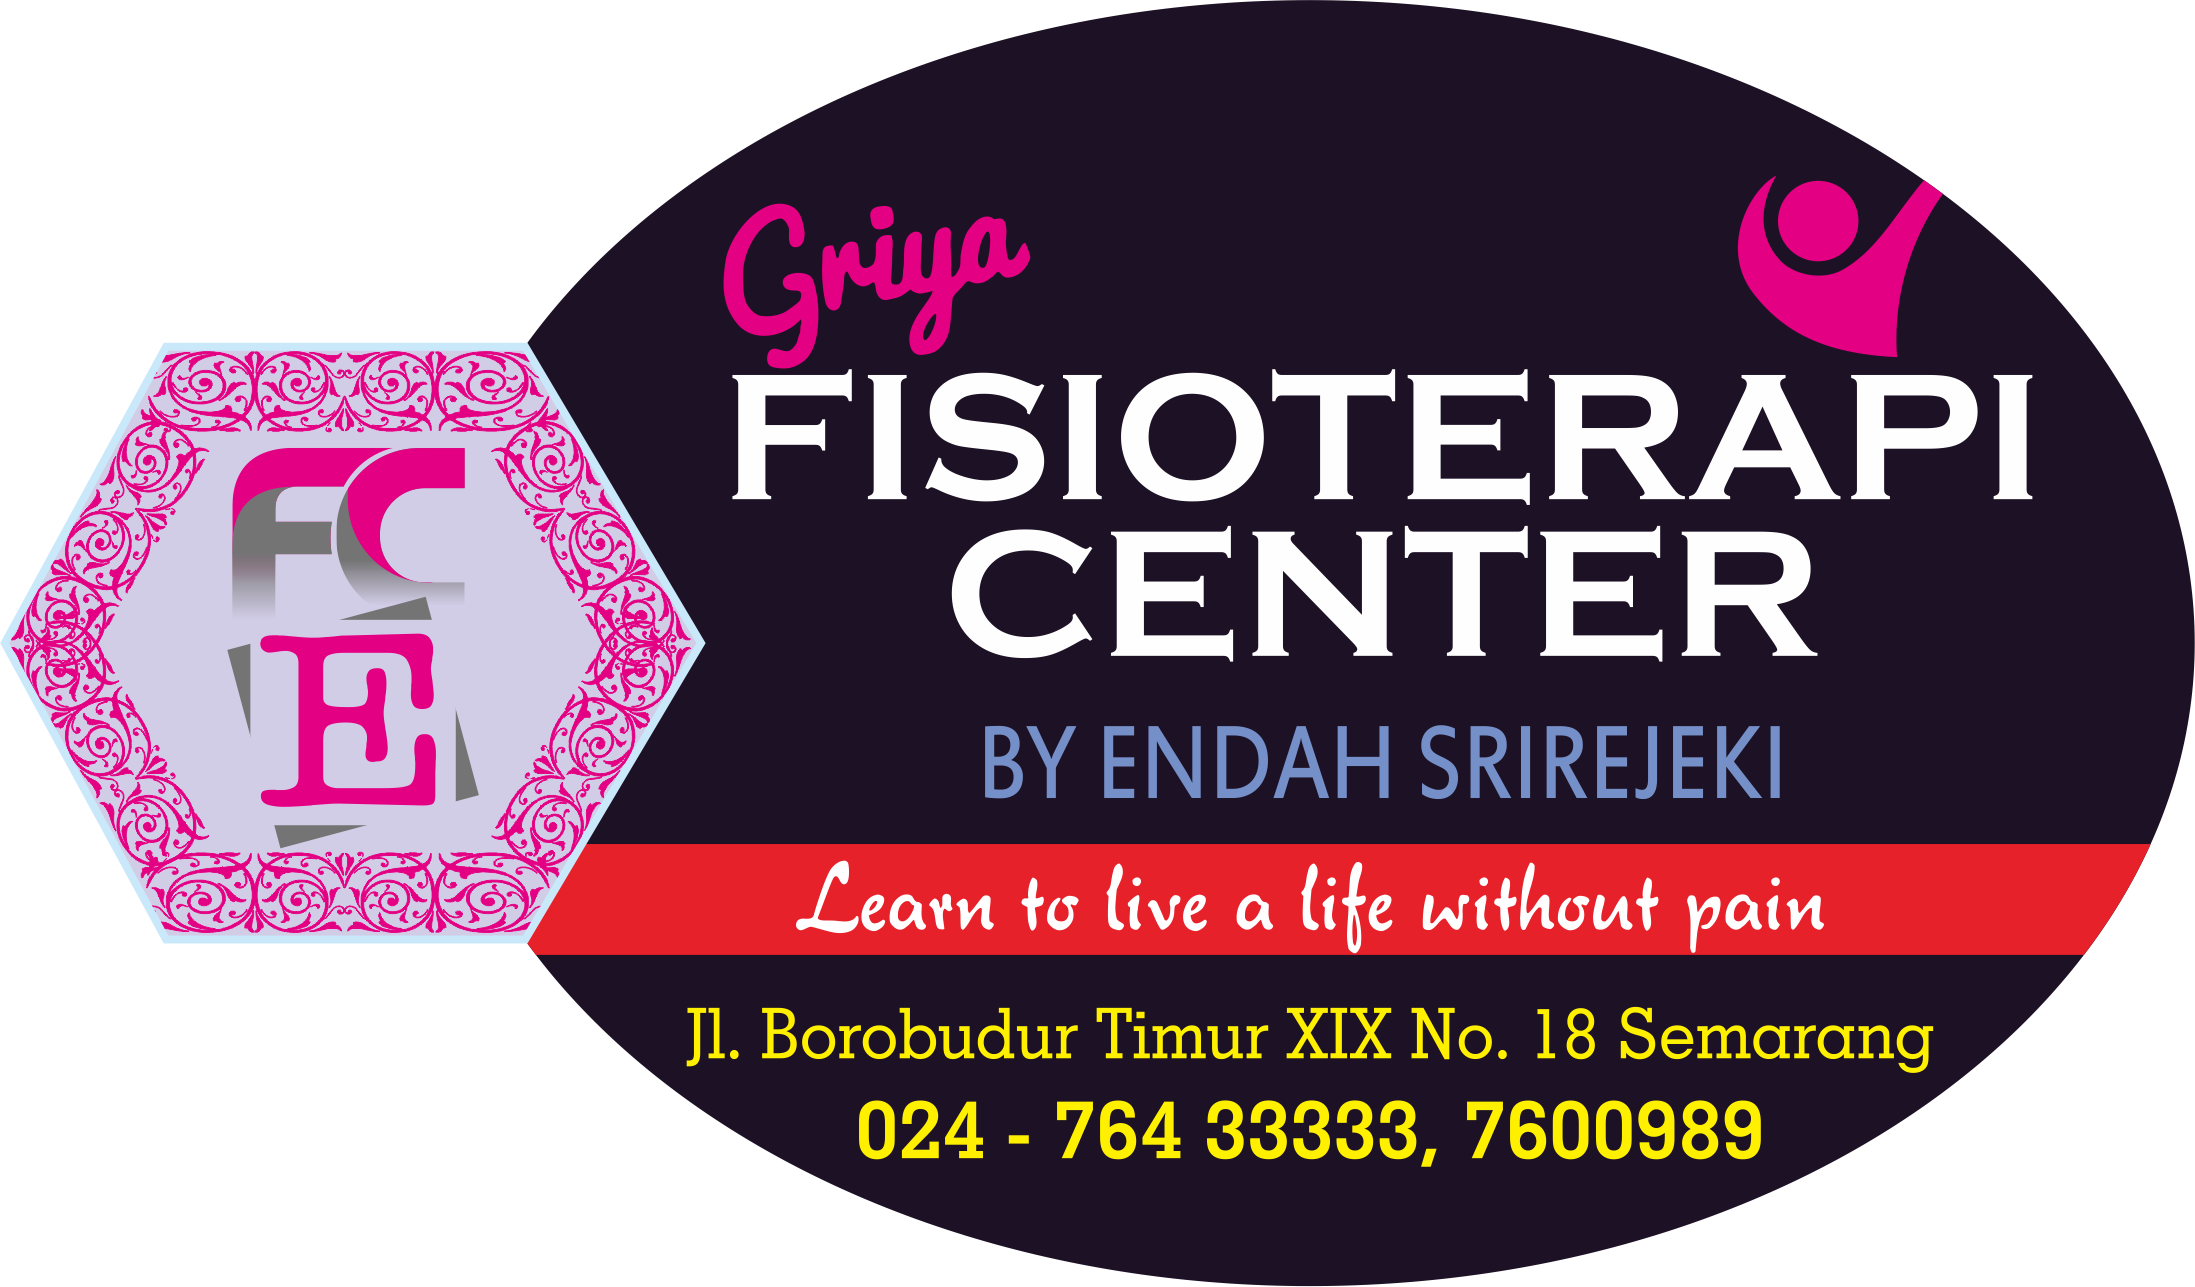 Griya Fisioterapi Center Semarang